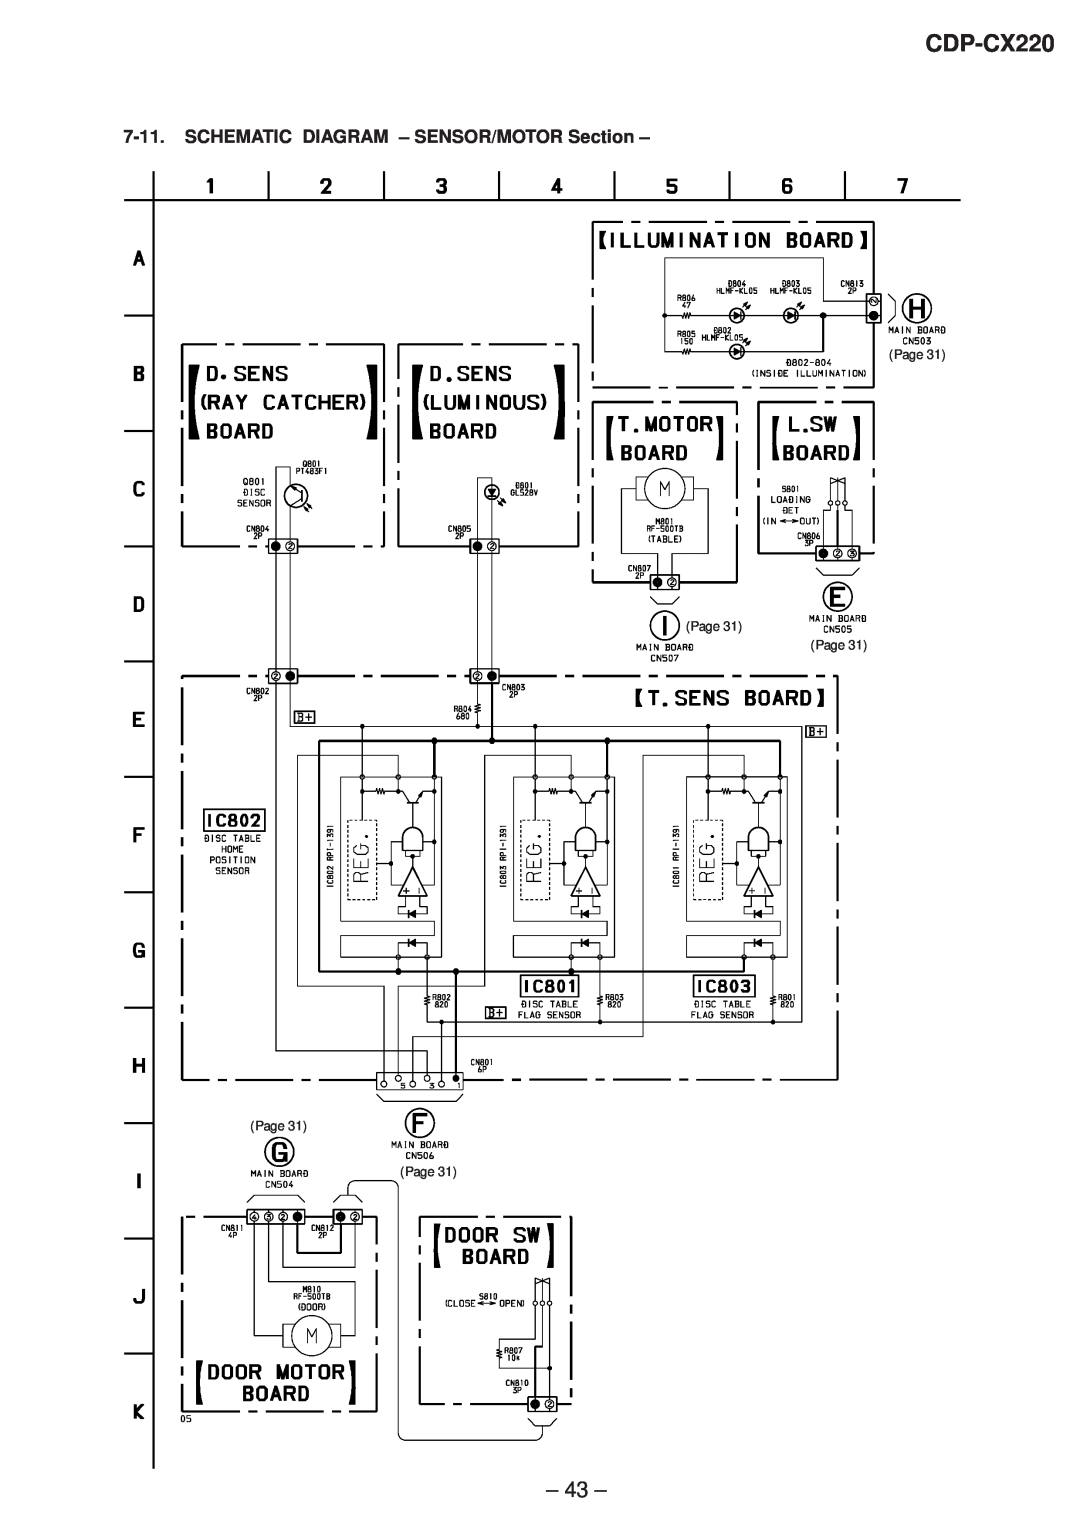 Sony Ericsson CDP-CX220 service manual SCHEMATIC DIAGRAM - SENSOR/MOTOR Section 